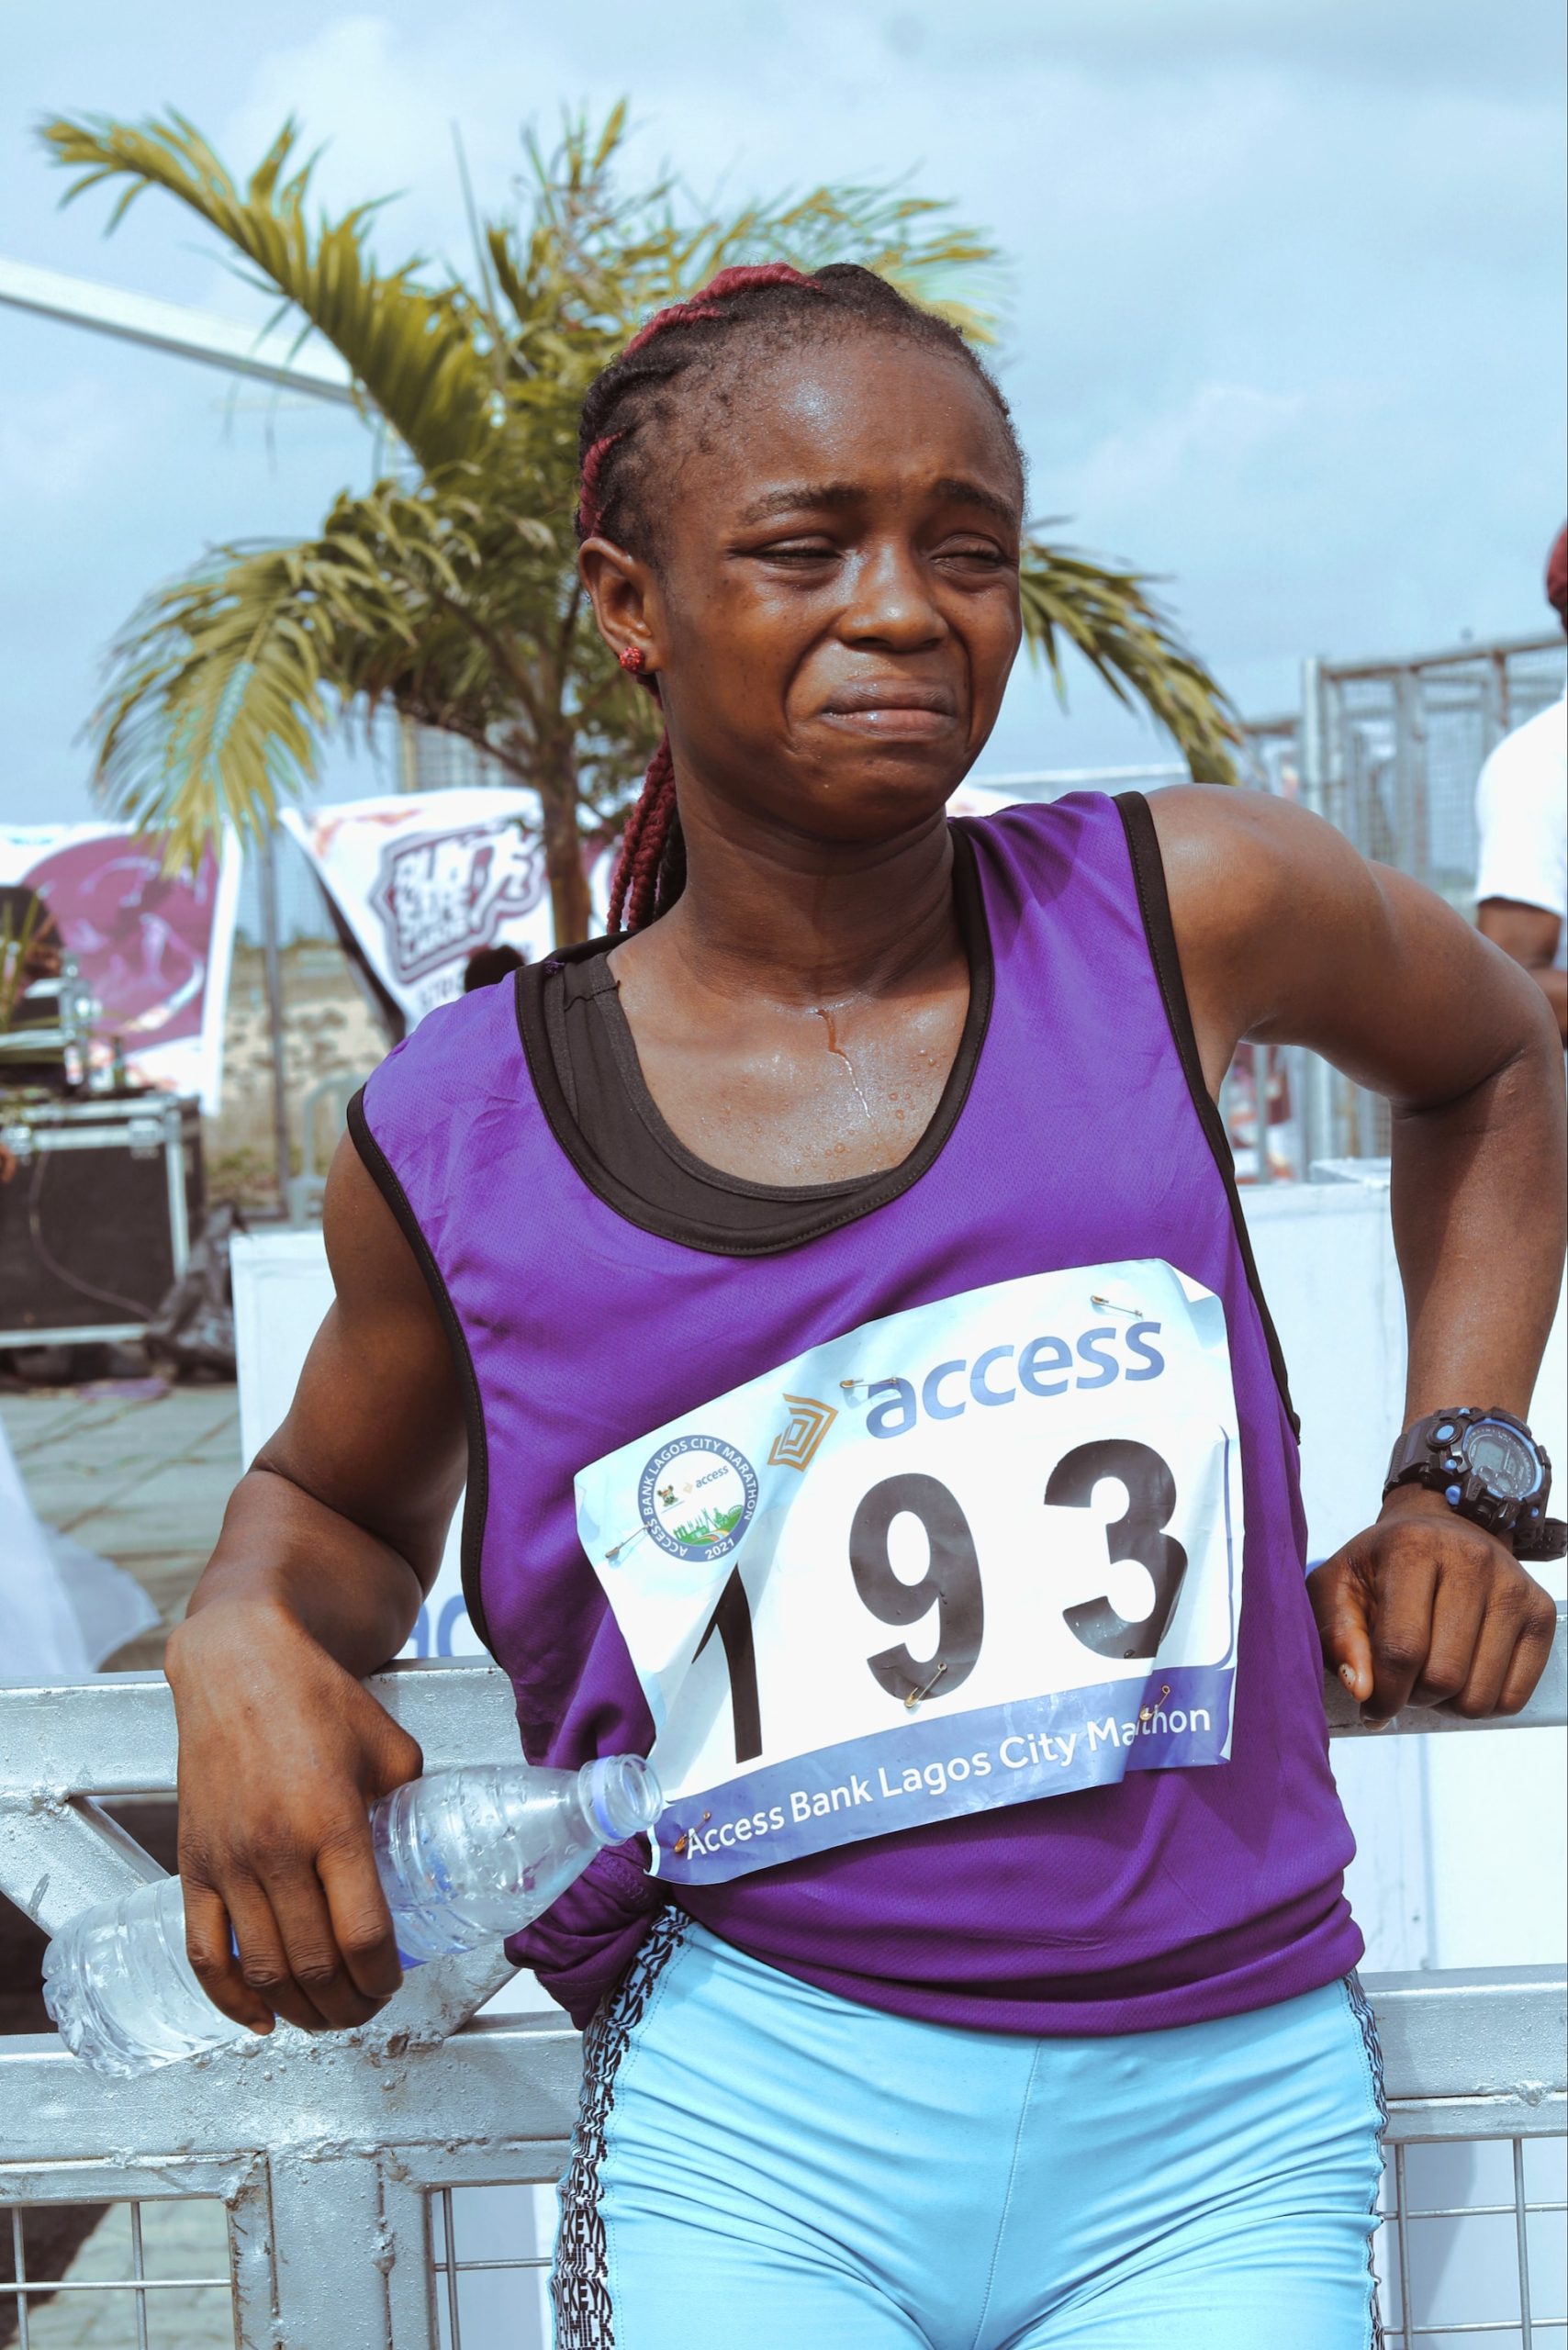 the image shows a female sportswoman after a running triathlon marathon